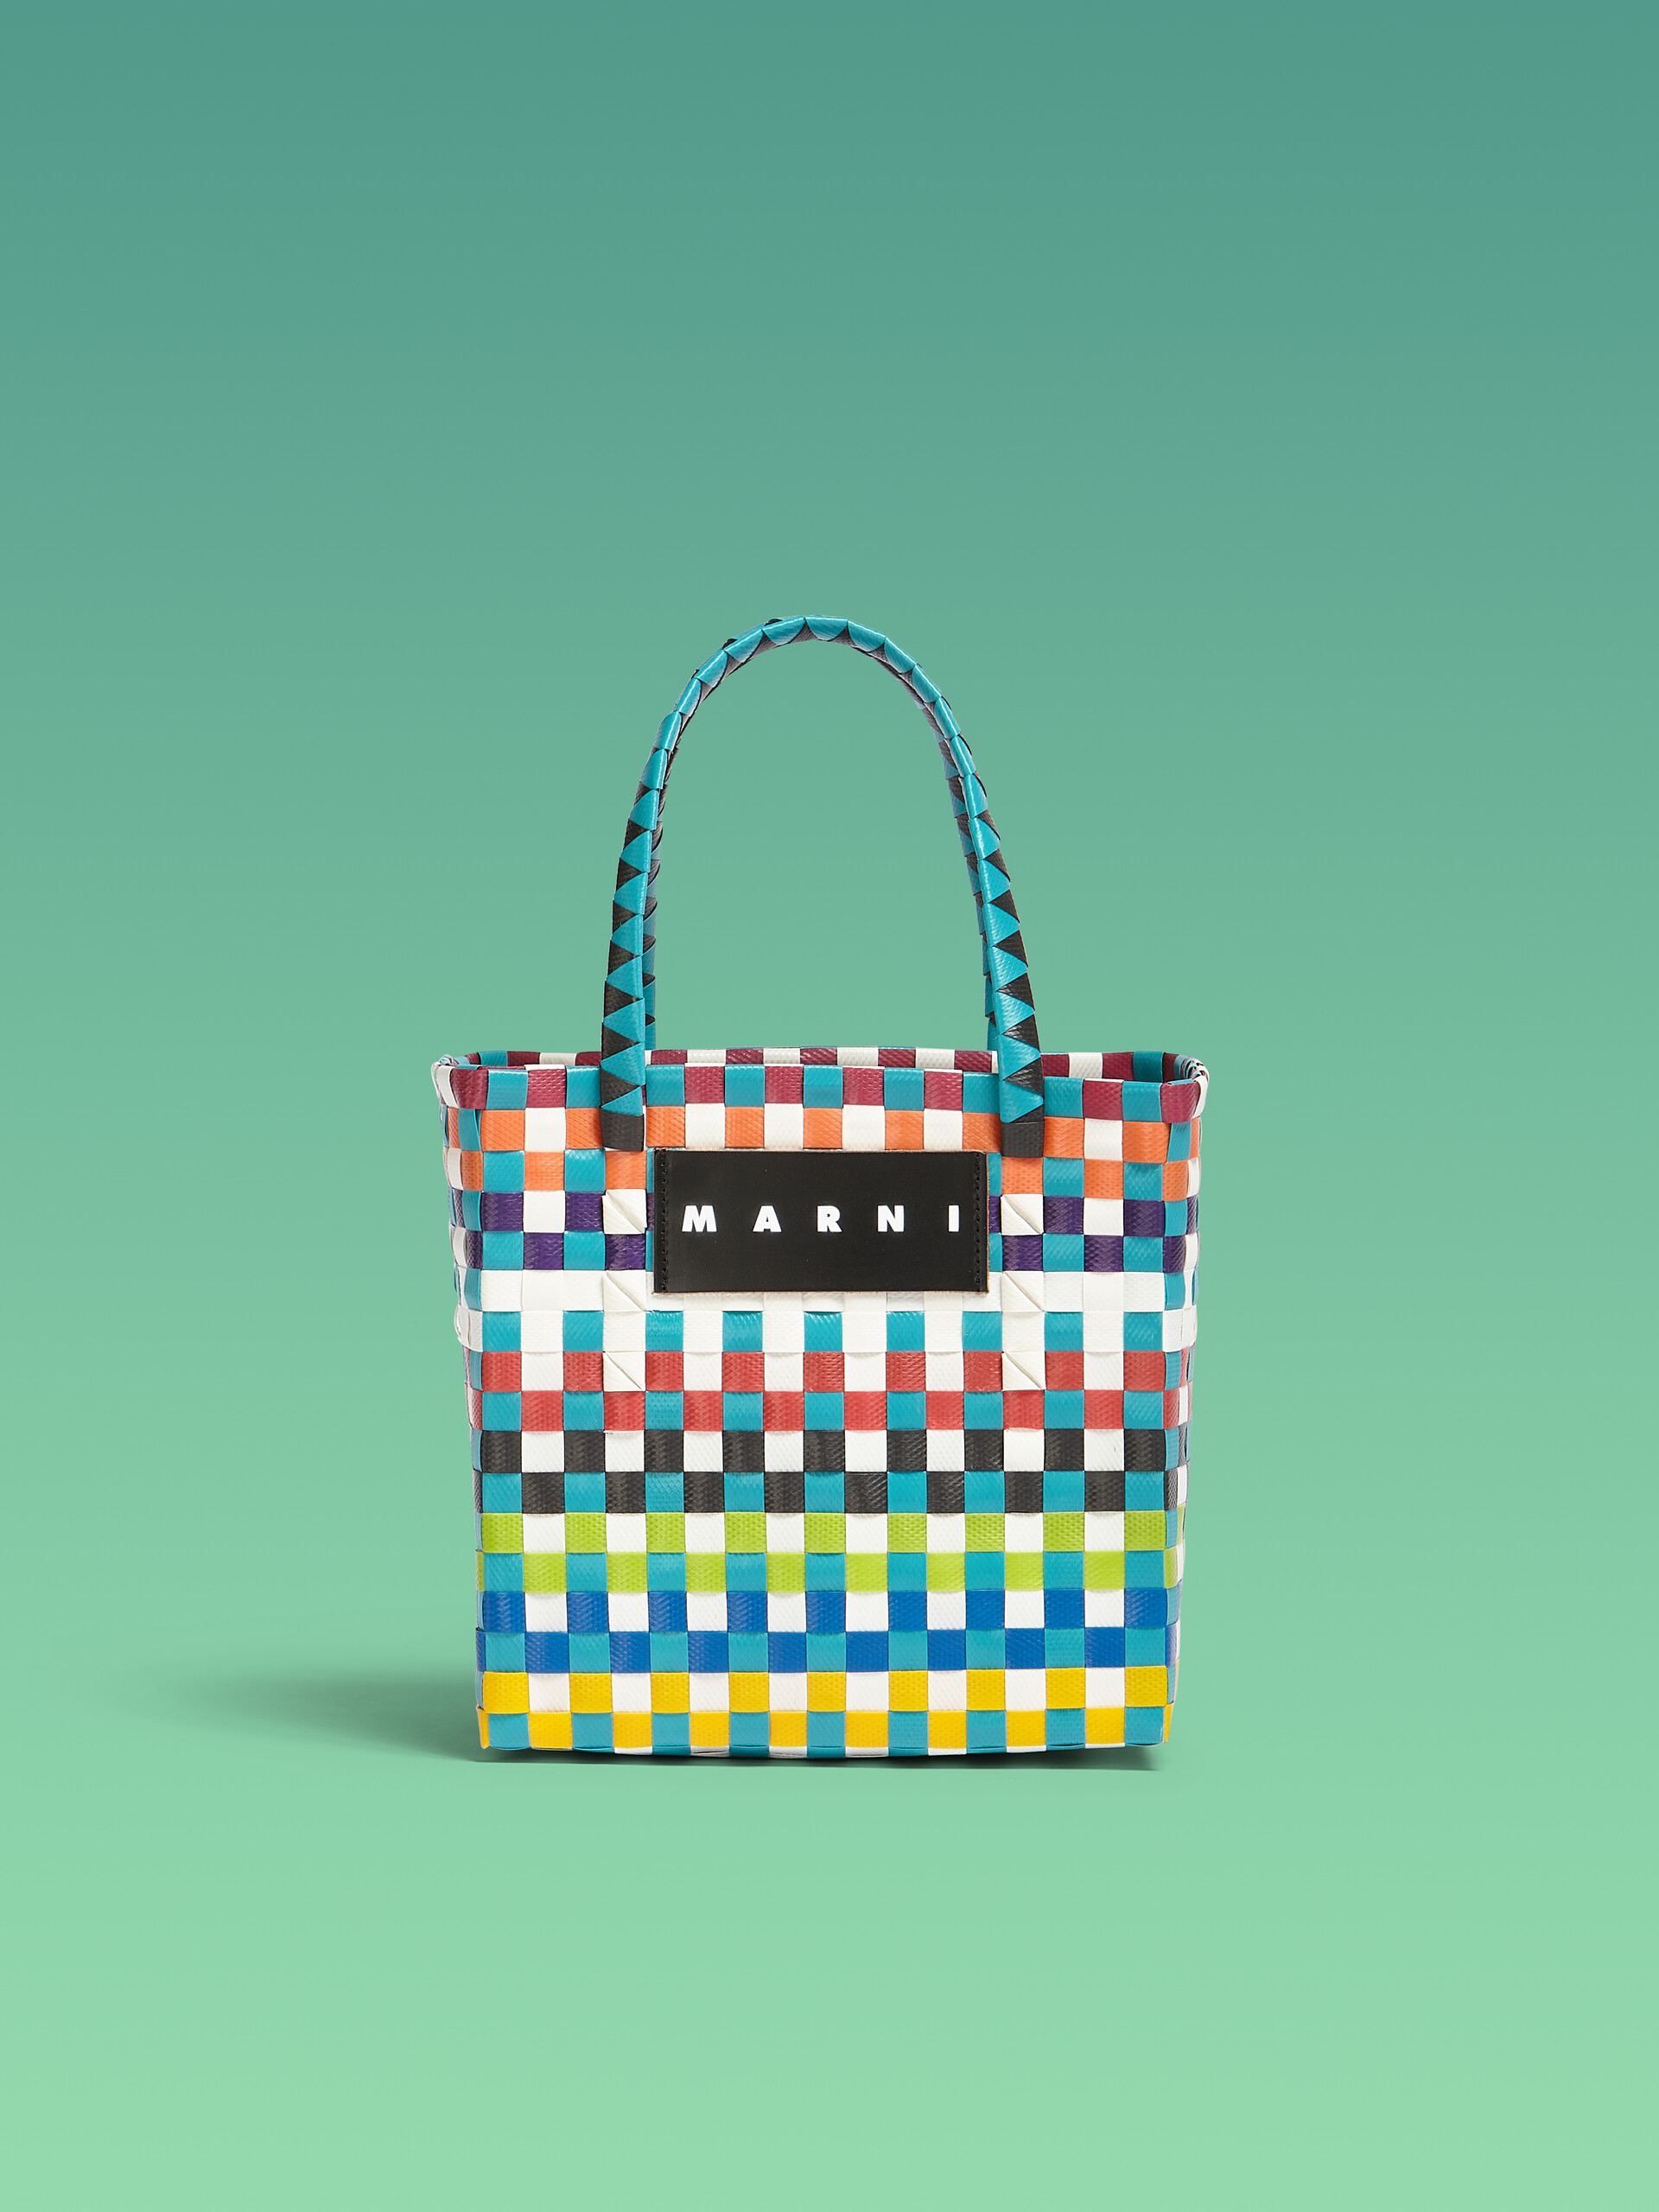 MARNI MARKET BASKET bag in multicolor woven material - Bags - Image 1